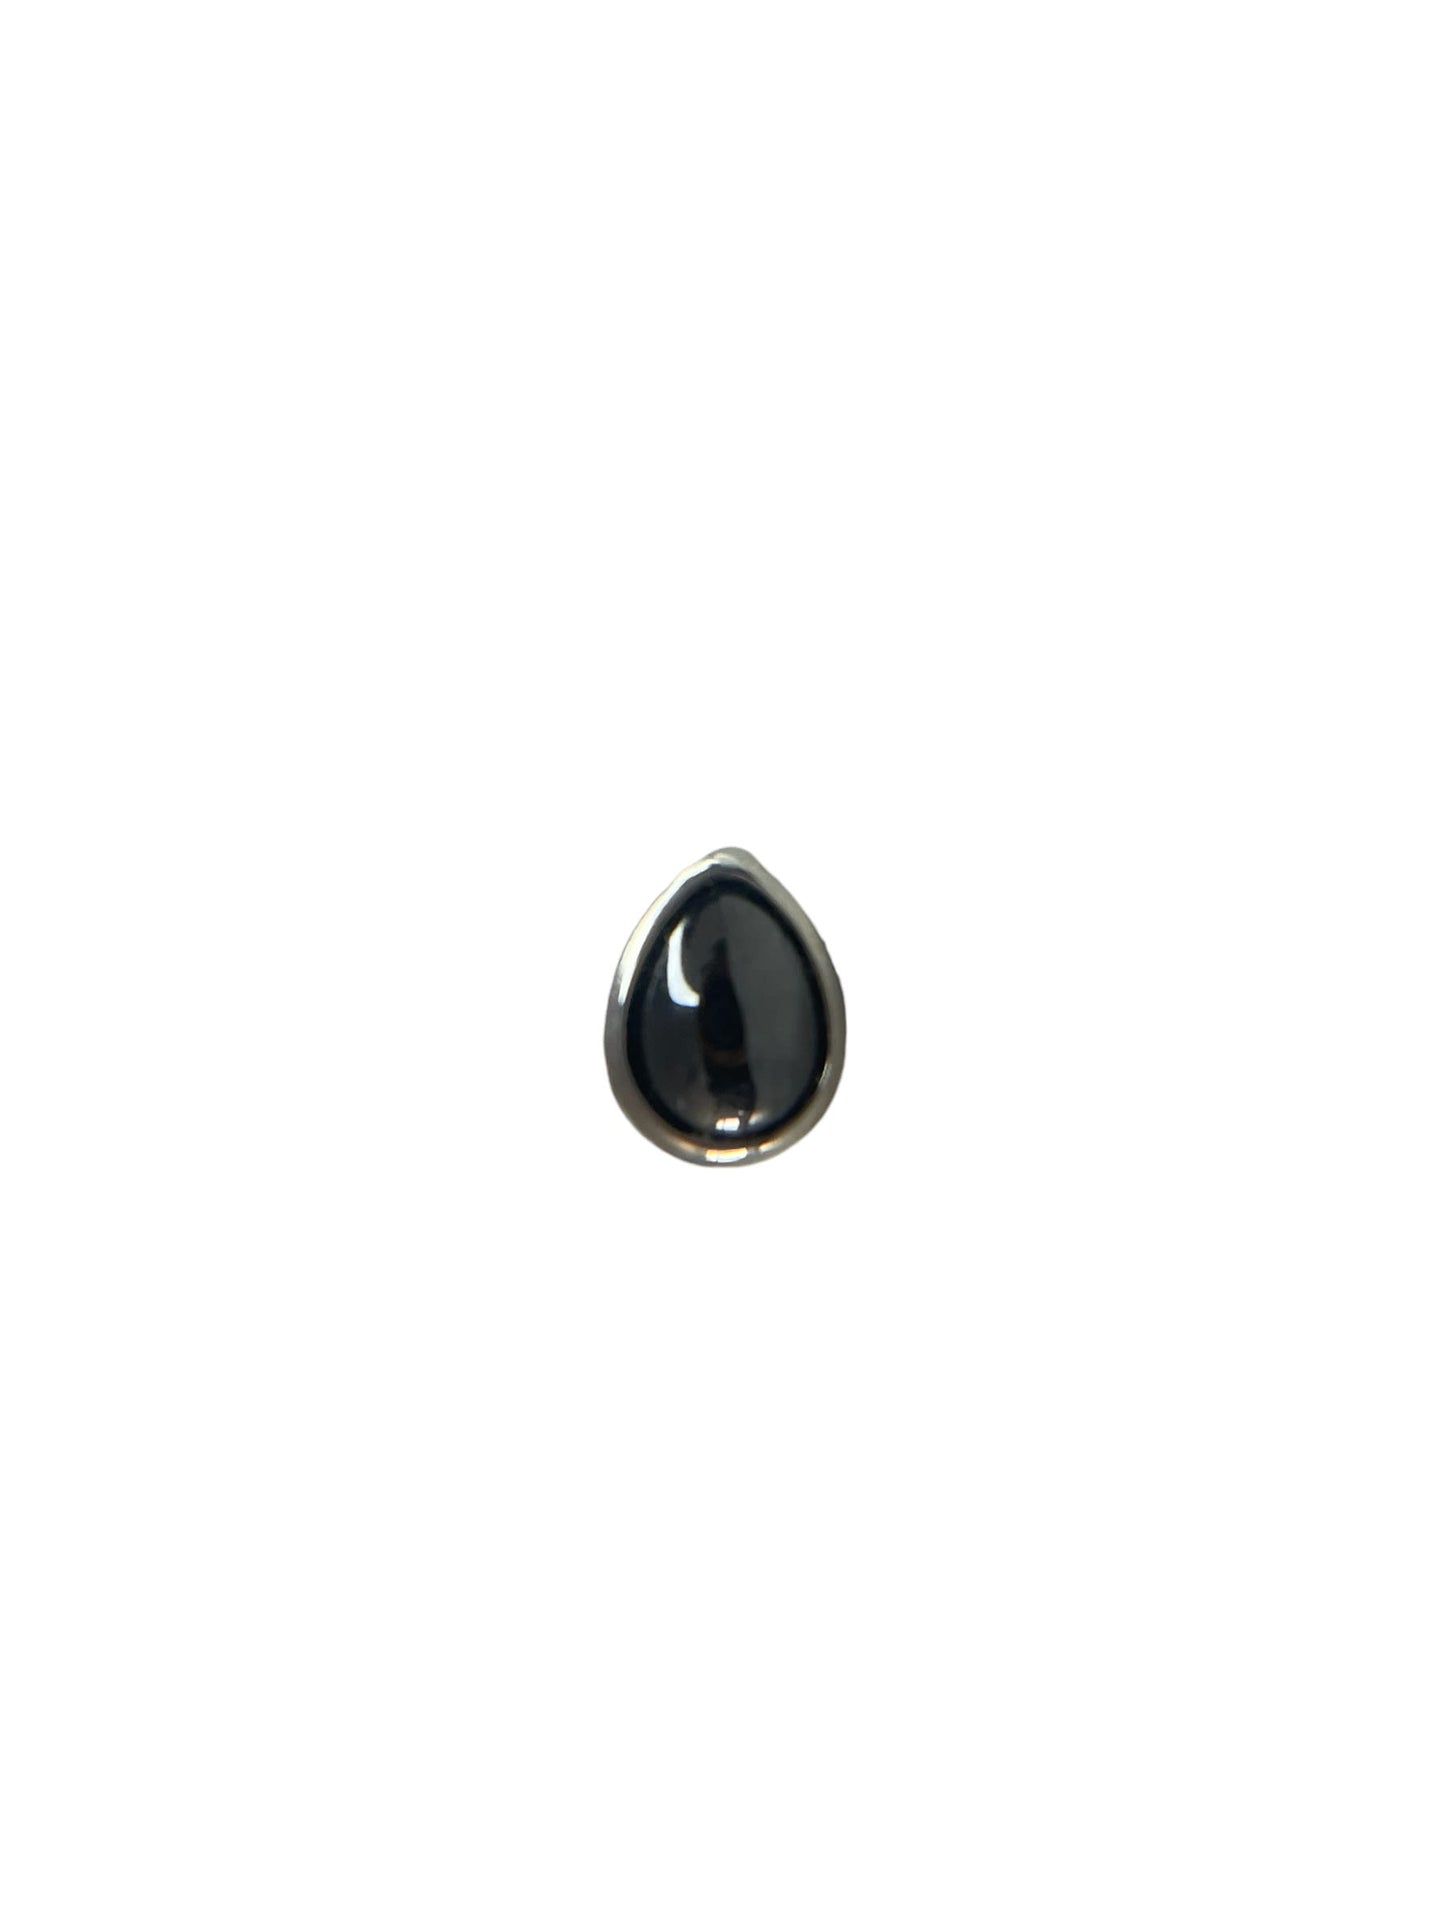 Figura opal c/ rosca titanio ASTM F136 - Accesorio gota piedra onix